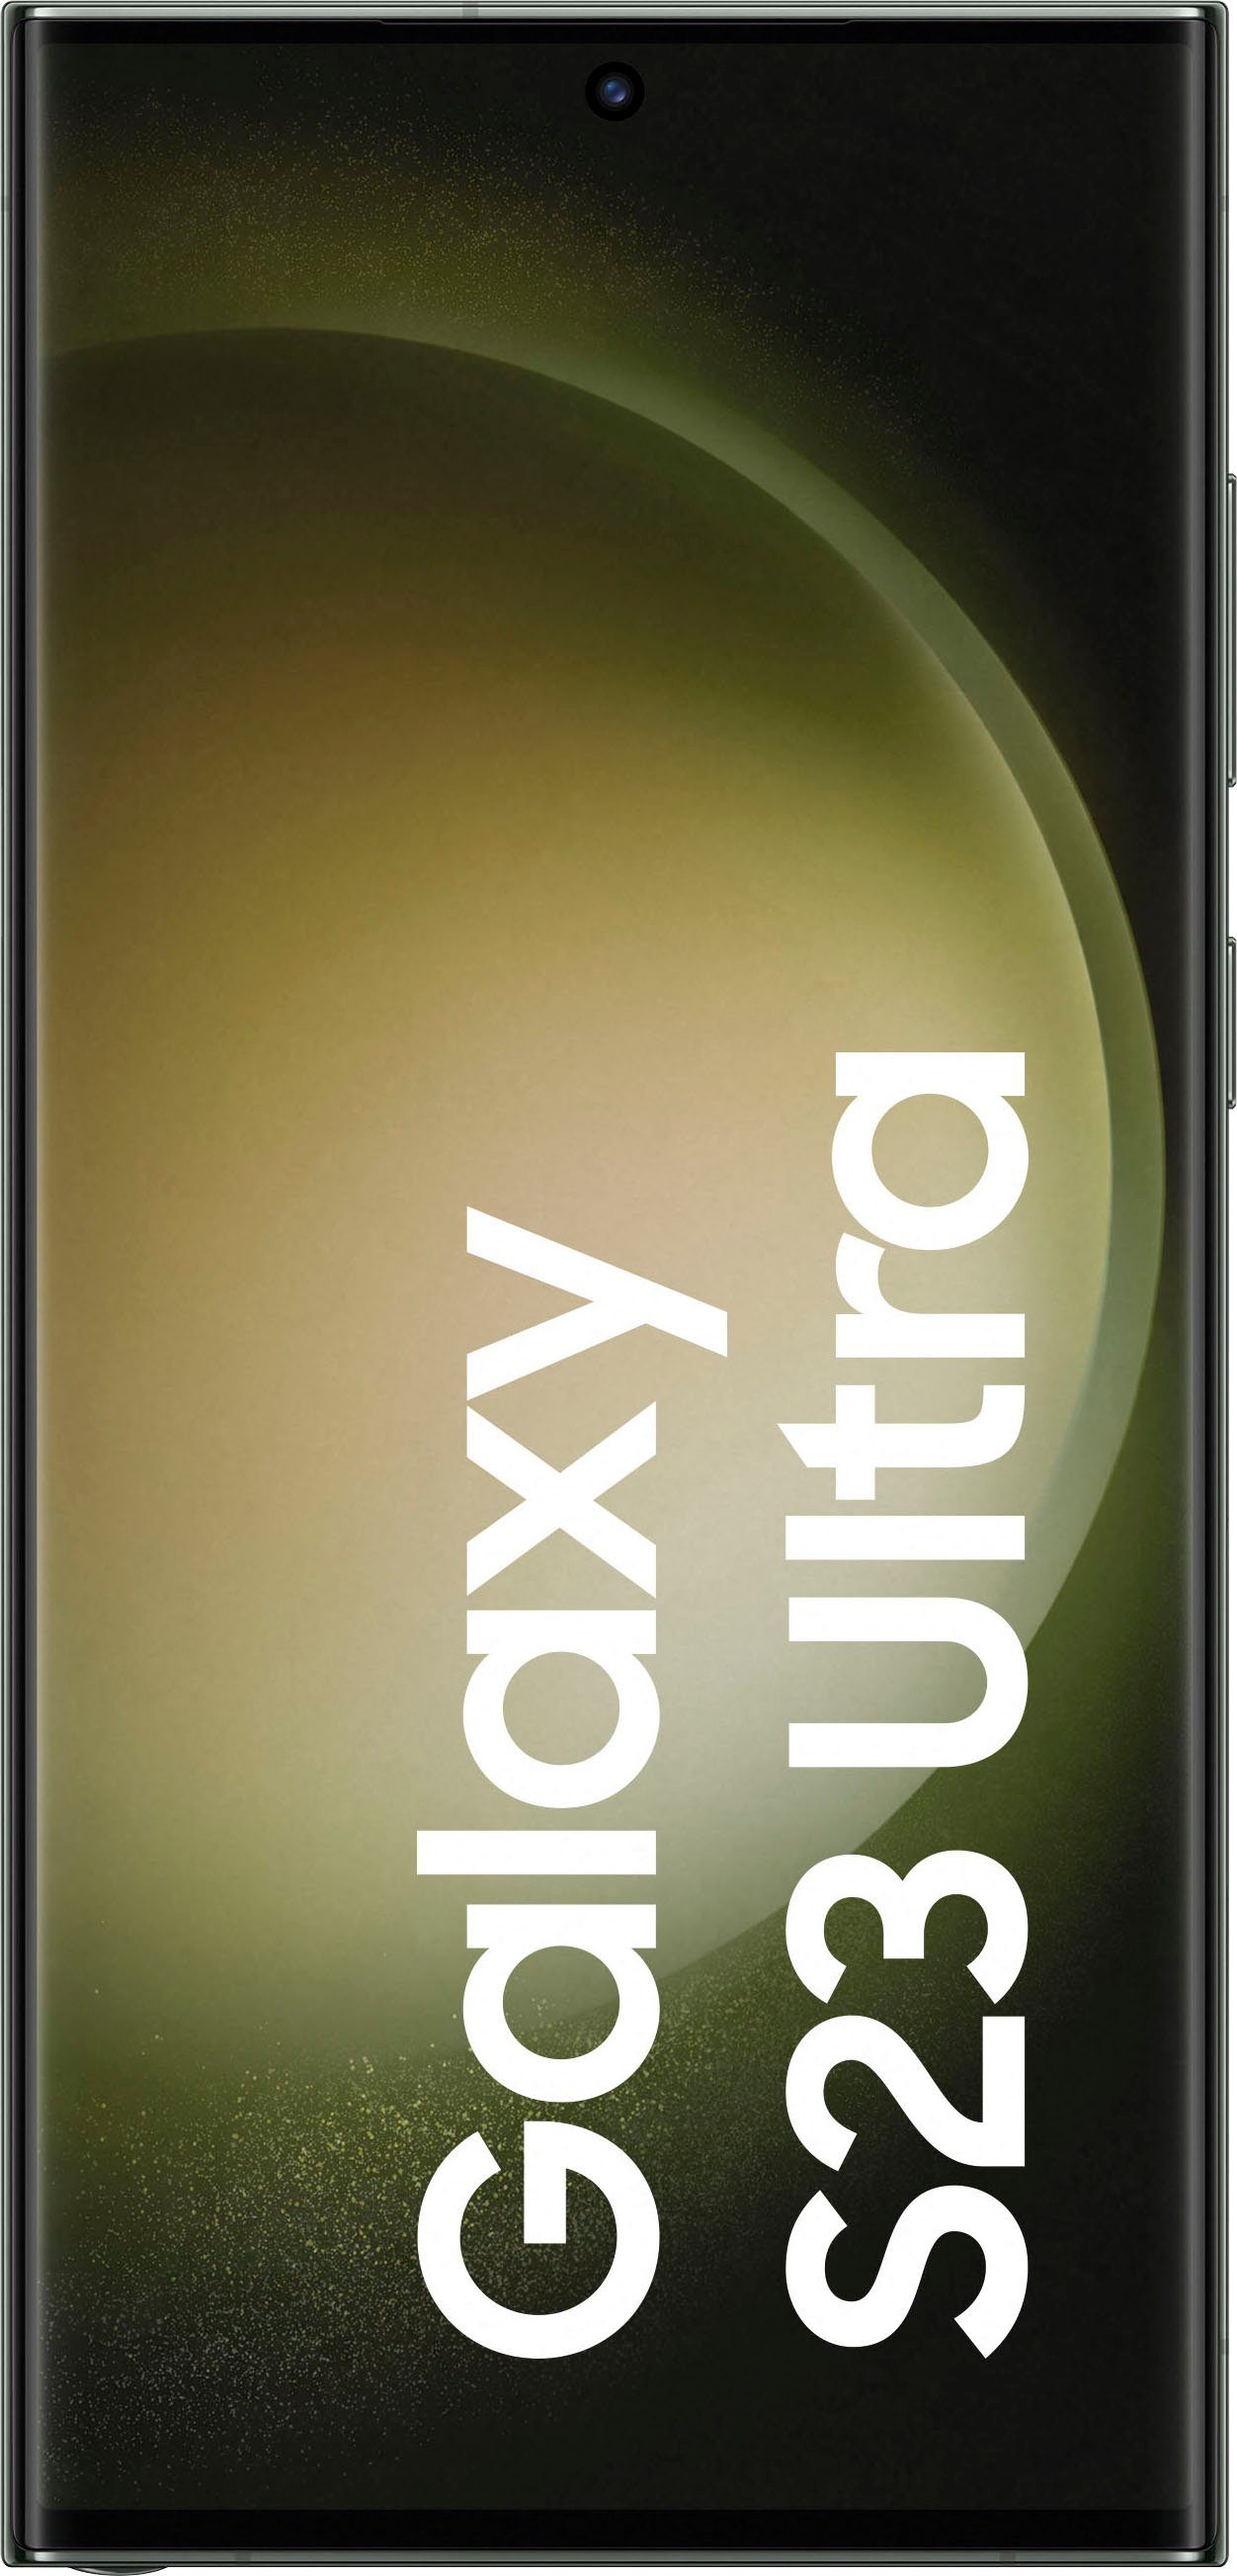 GB 512 Speicherplatz, 200 (17,31 Samsung S23 Zoll, Smartphone Galaxy Kamera) cm/6,8 MP Ultra Green